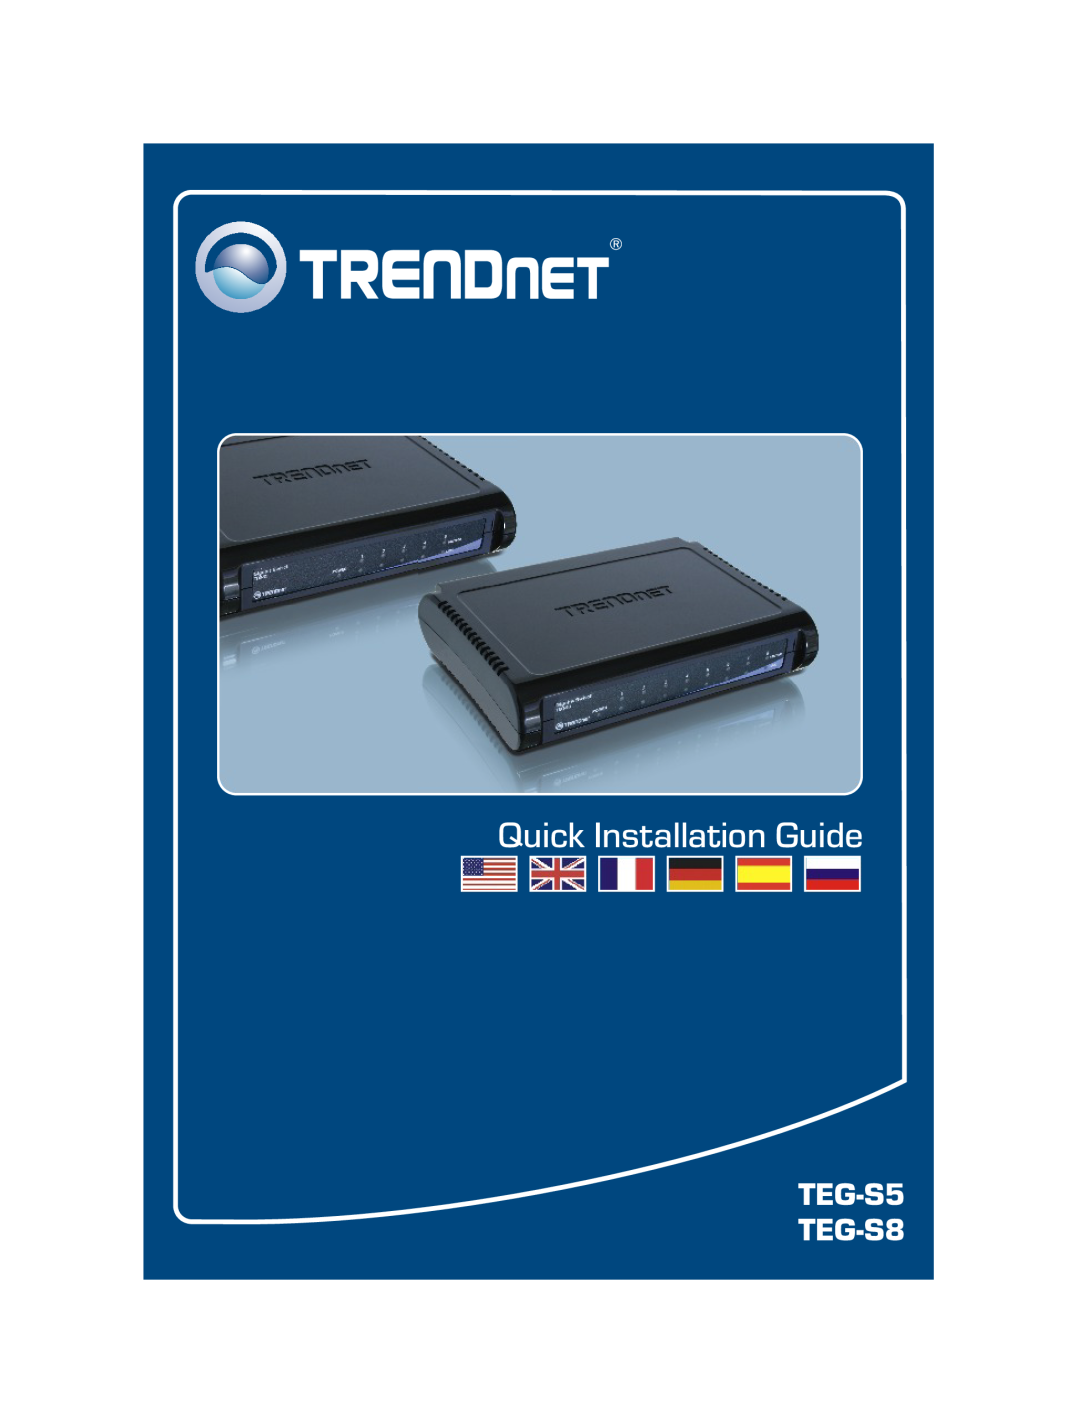 TRENDnet manual TEG-S5 TEG-S8, Quick Installation Guide 